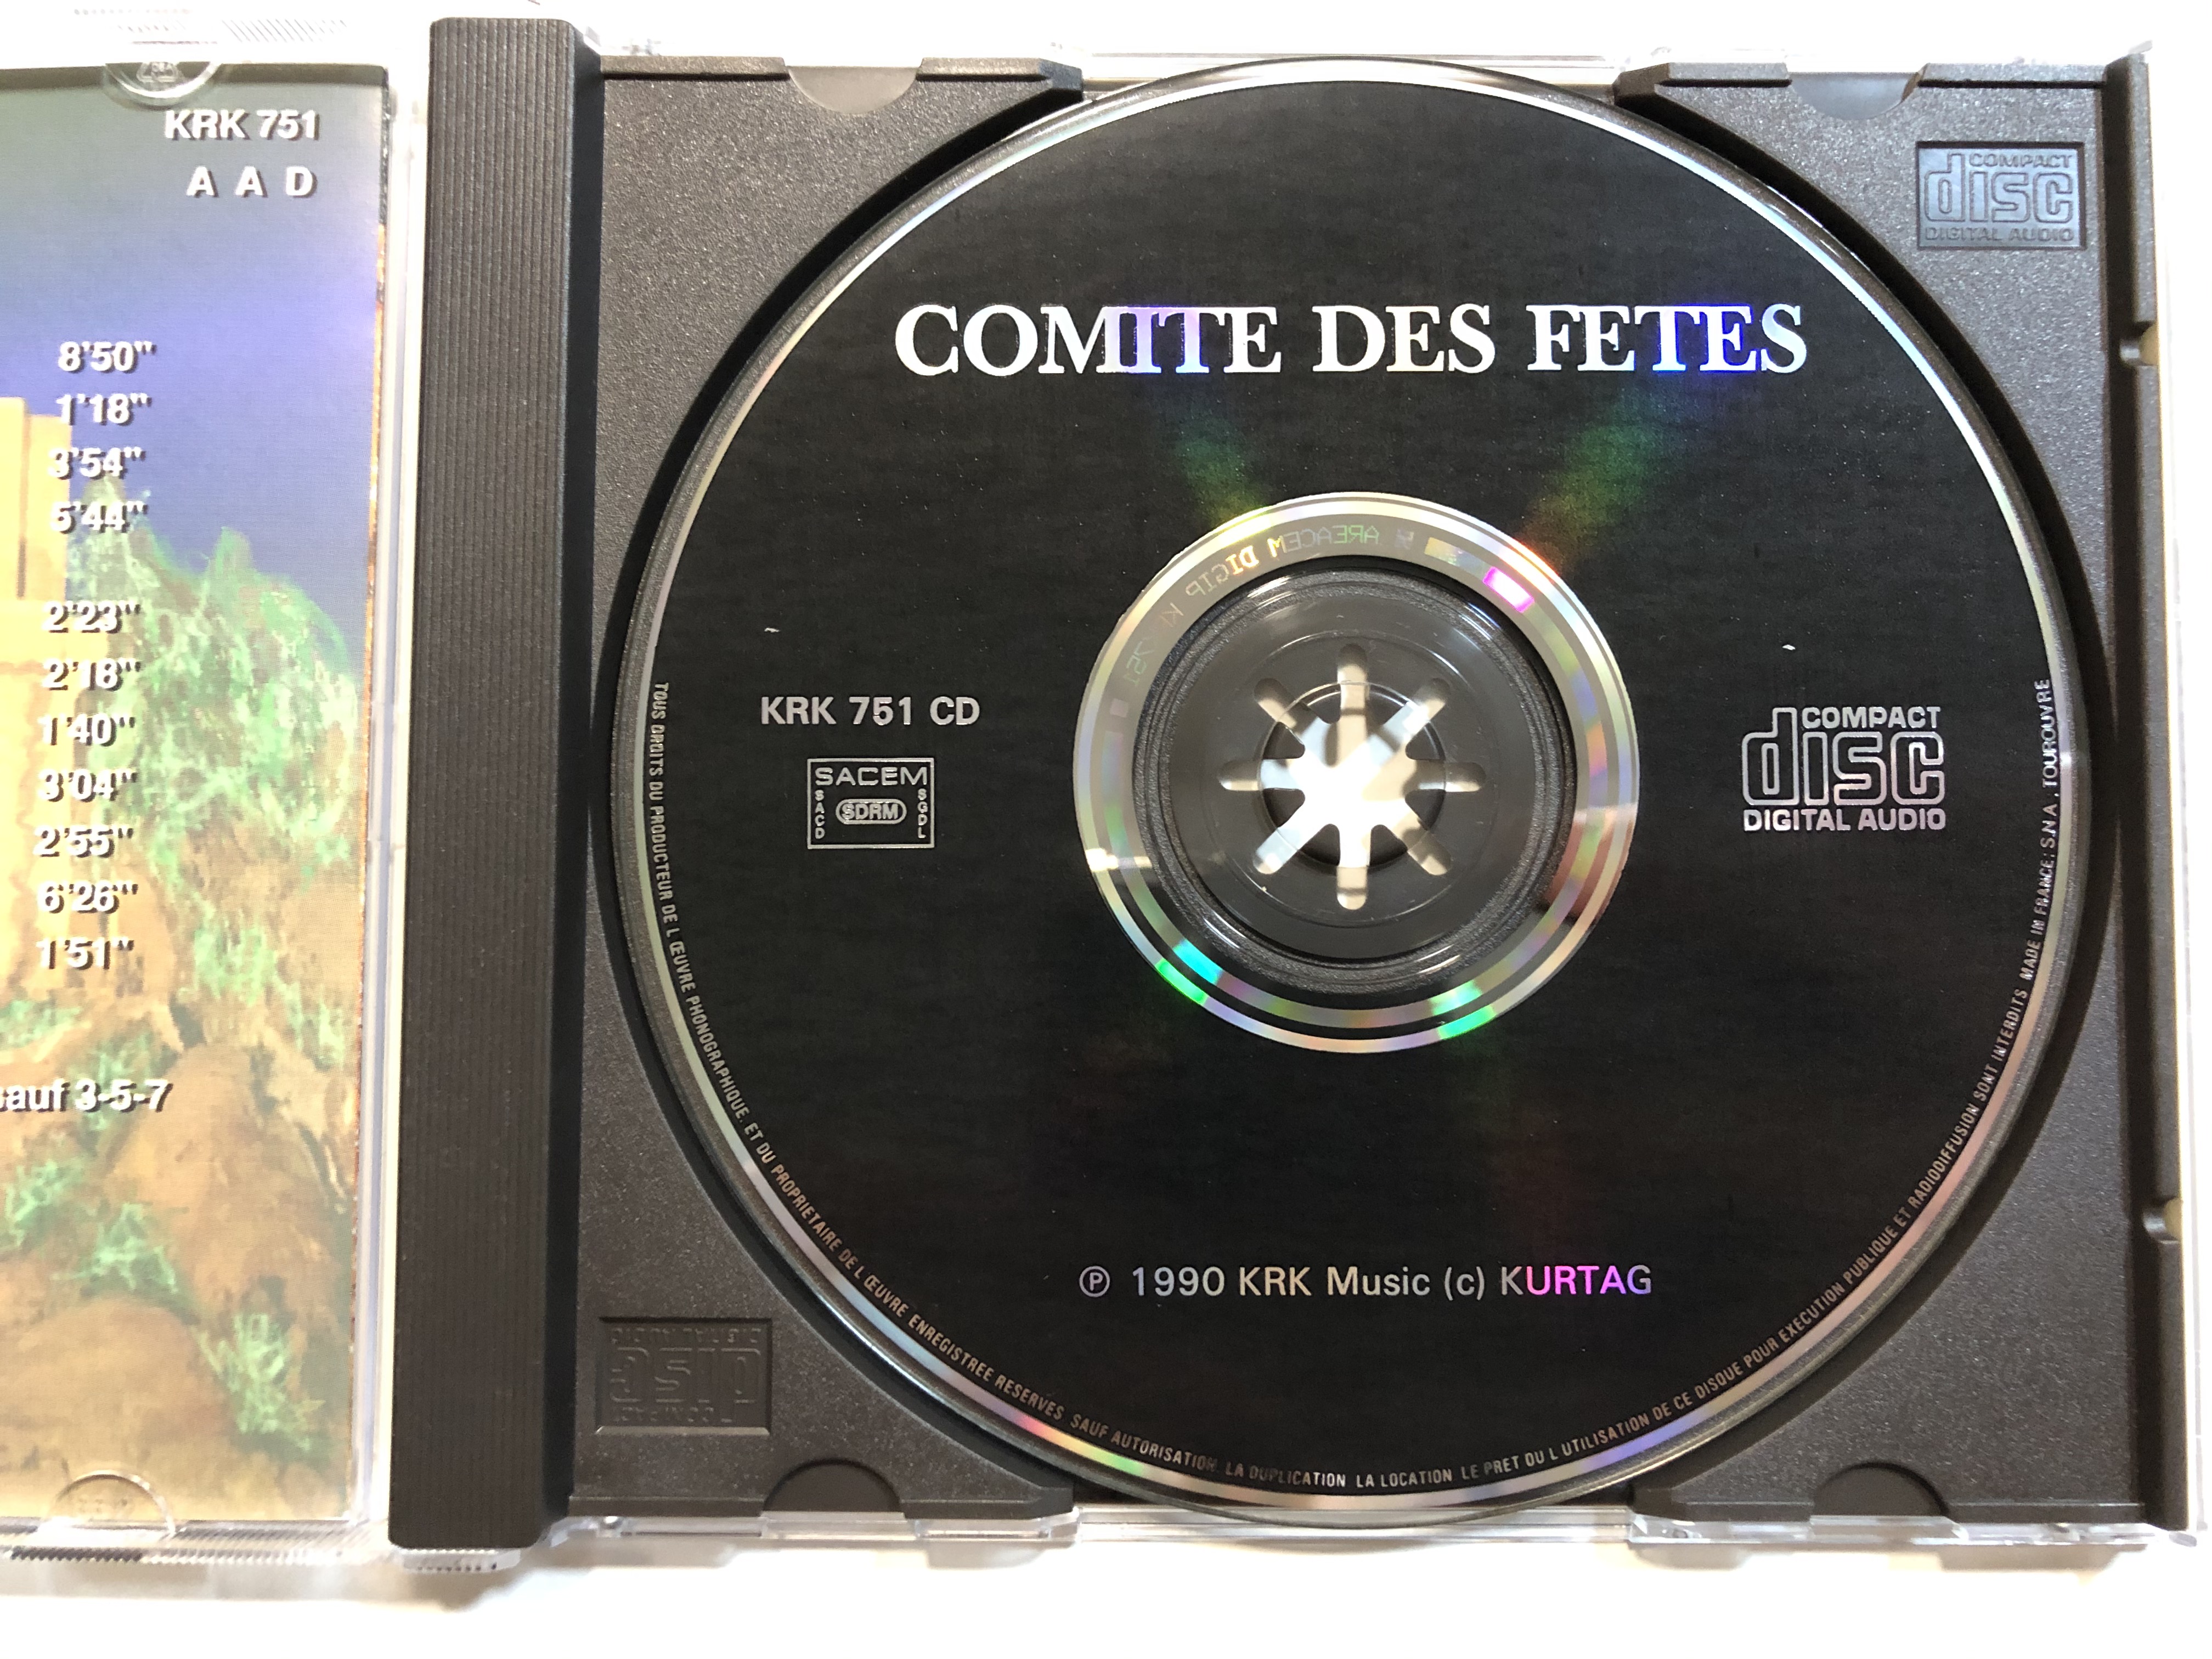 comite-des-fetes-daniel-kientzy-gyorgy-kurtag-frank-royon-le-mee-krk-music-audio-cd-1990-krk-751-4-.jpg